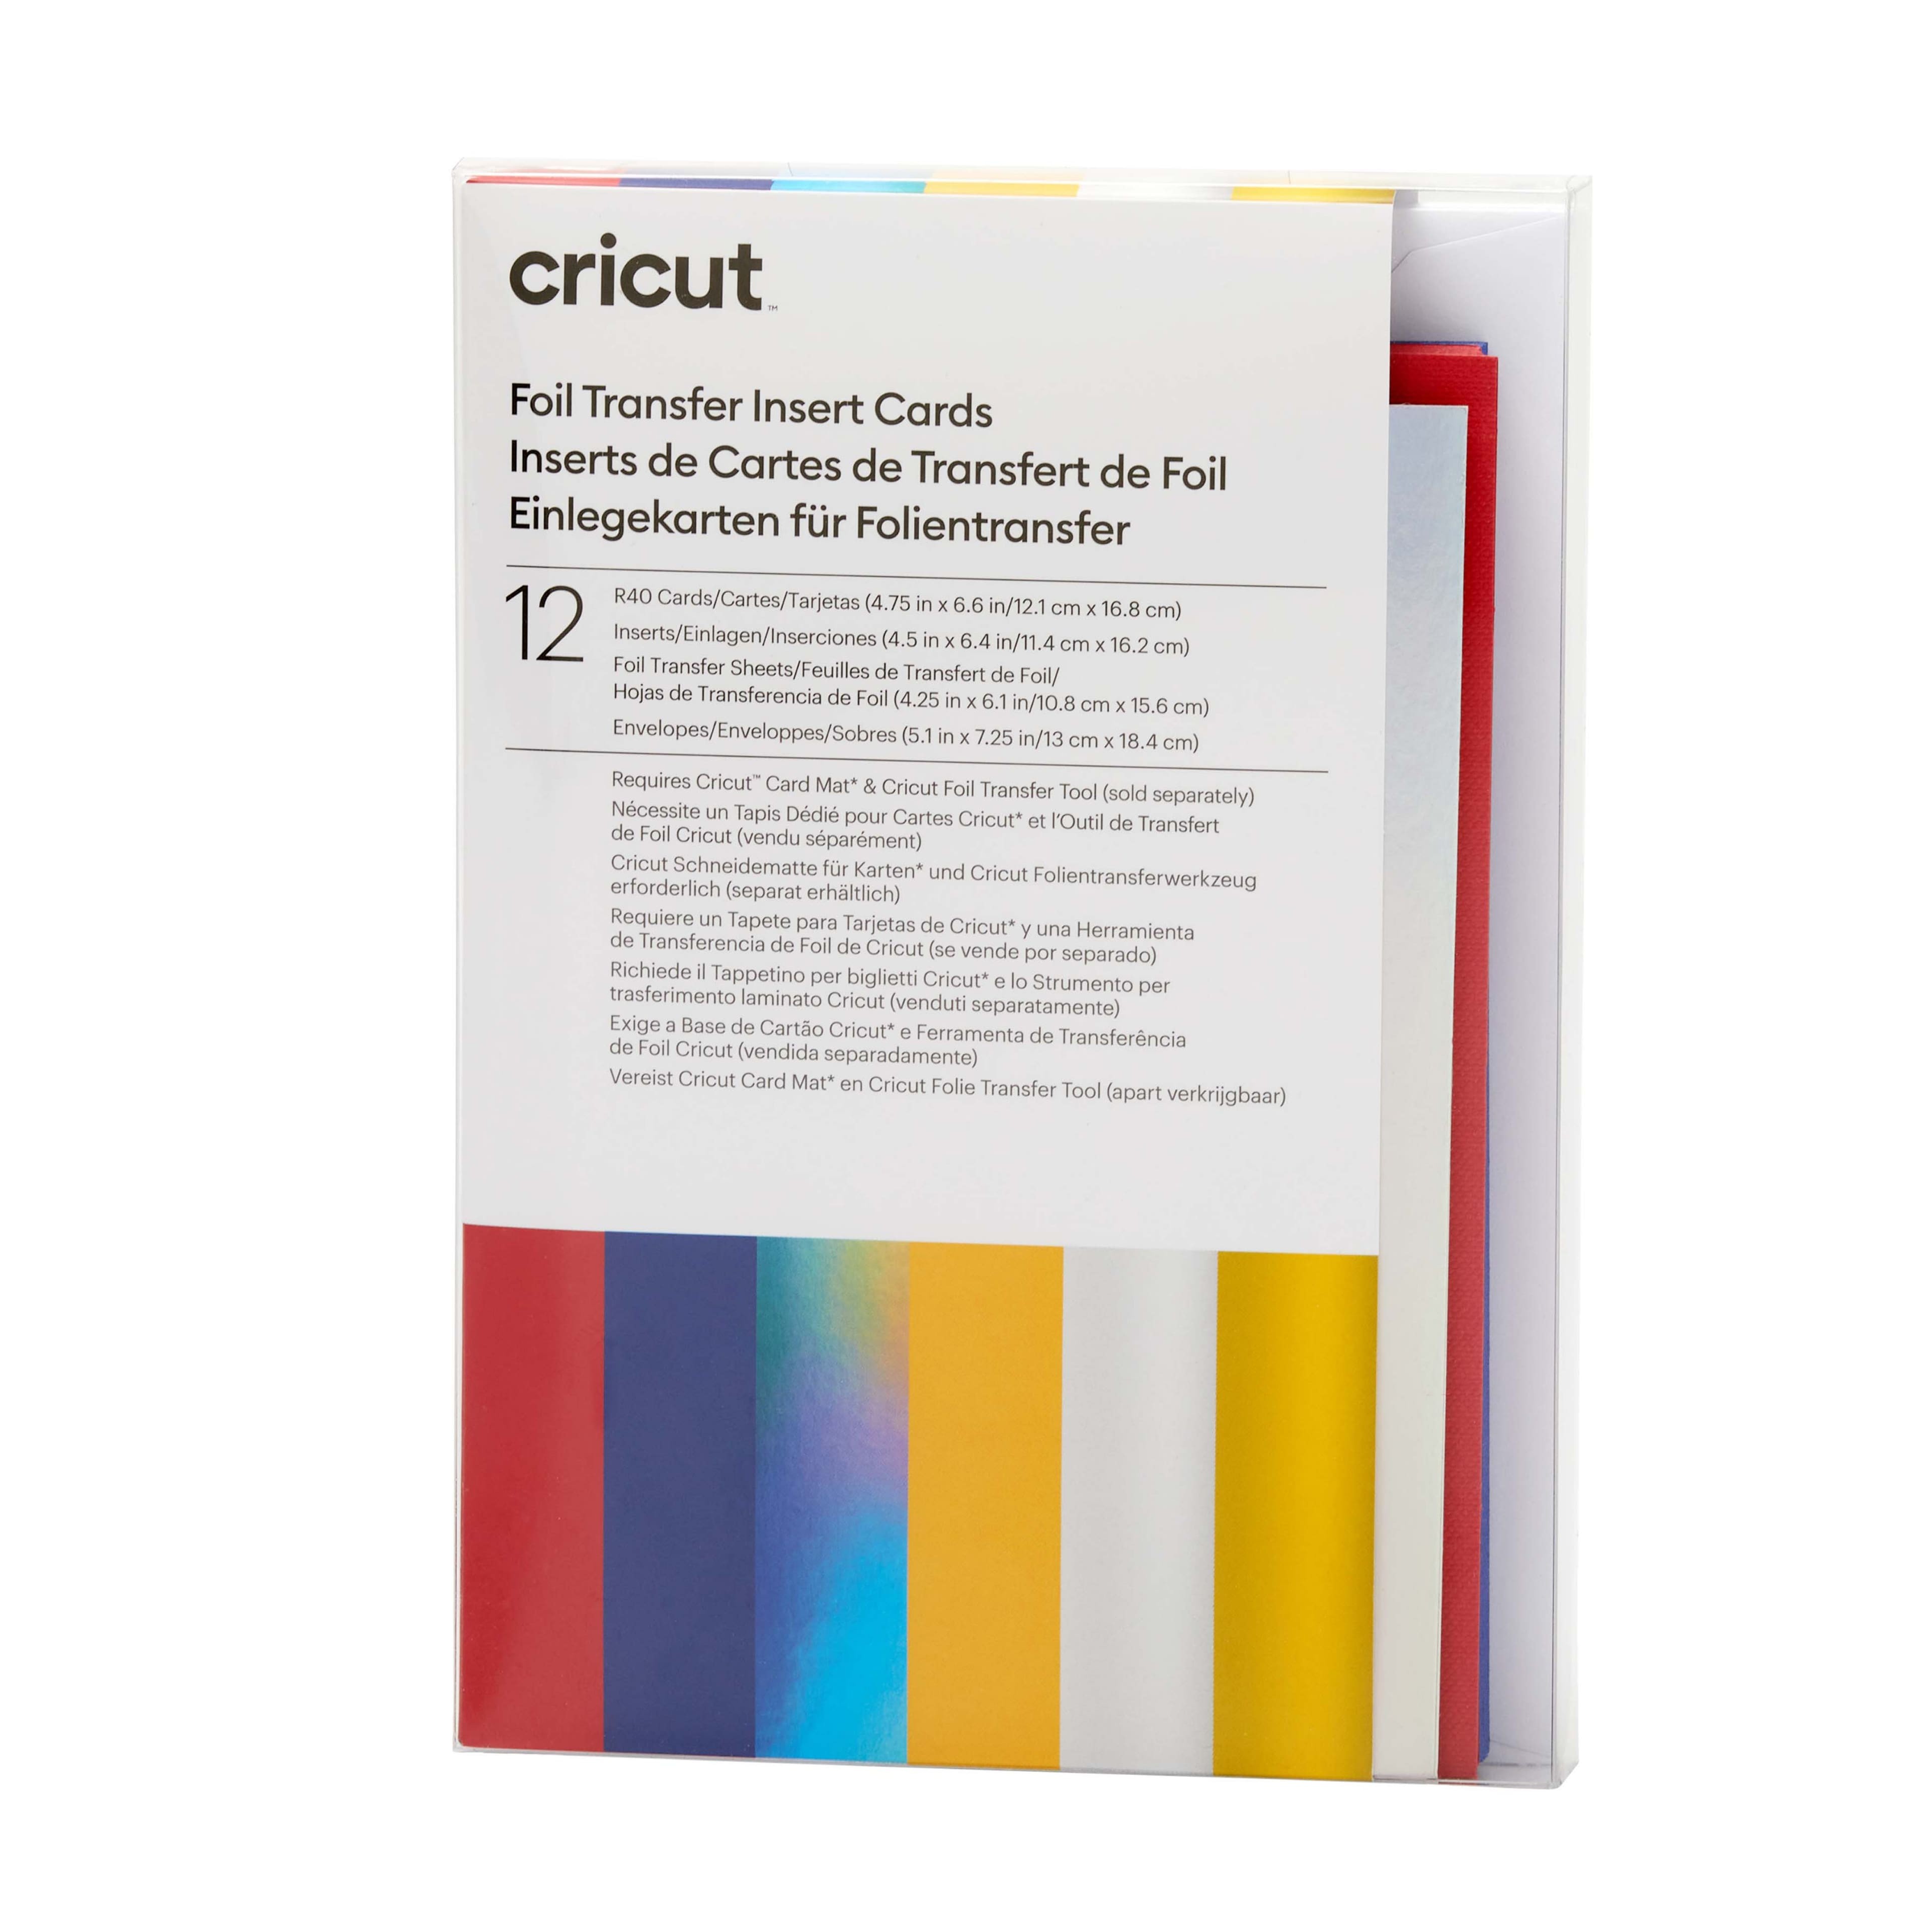 Cricut Insert Cards Glitz and Glam Sampler R10, R40